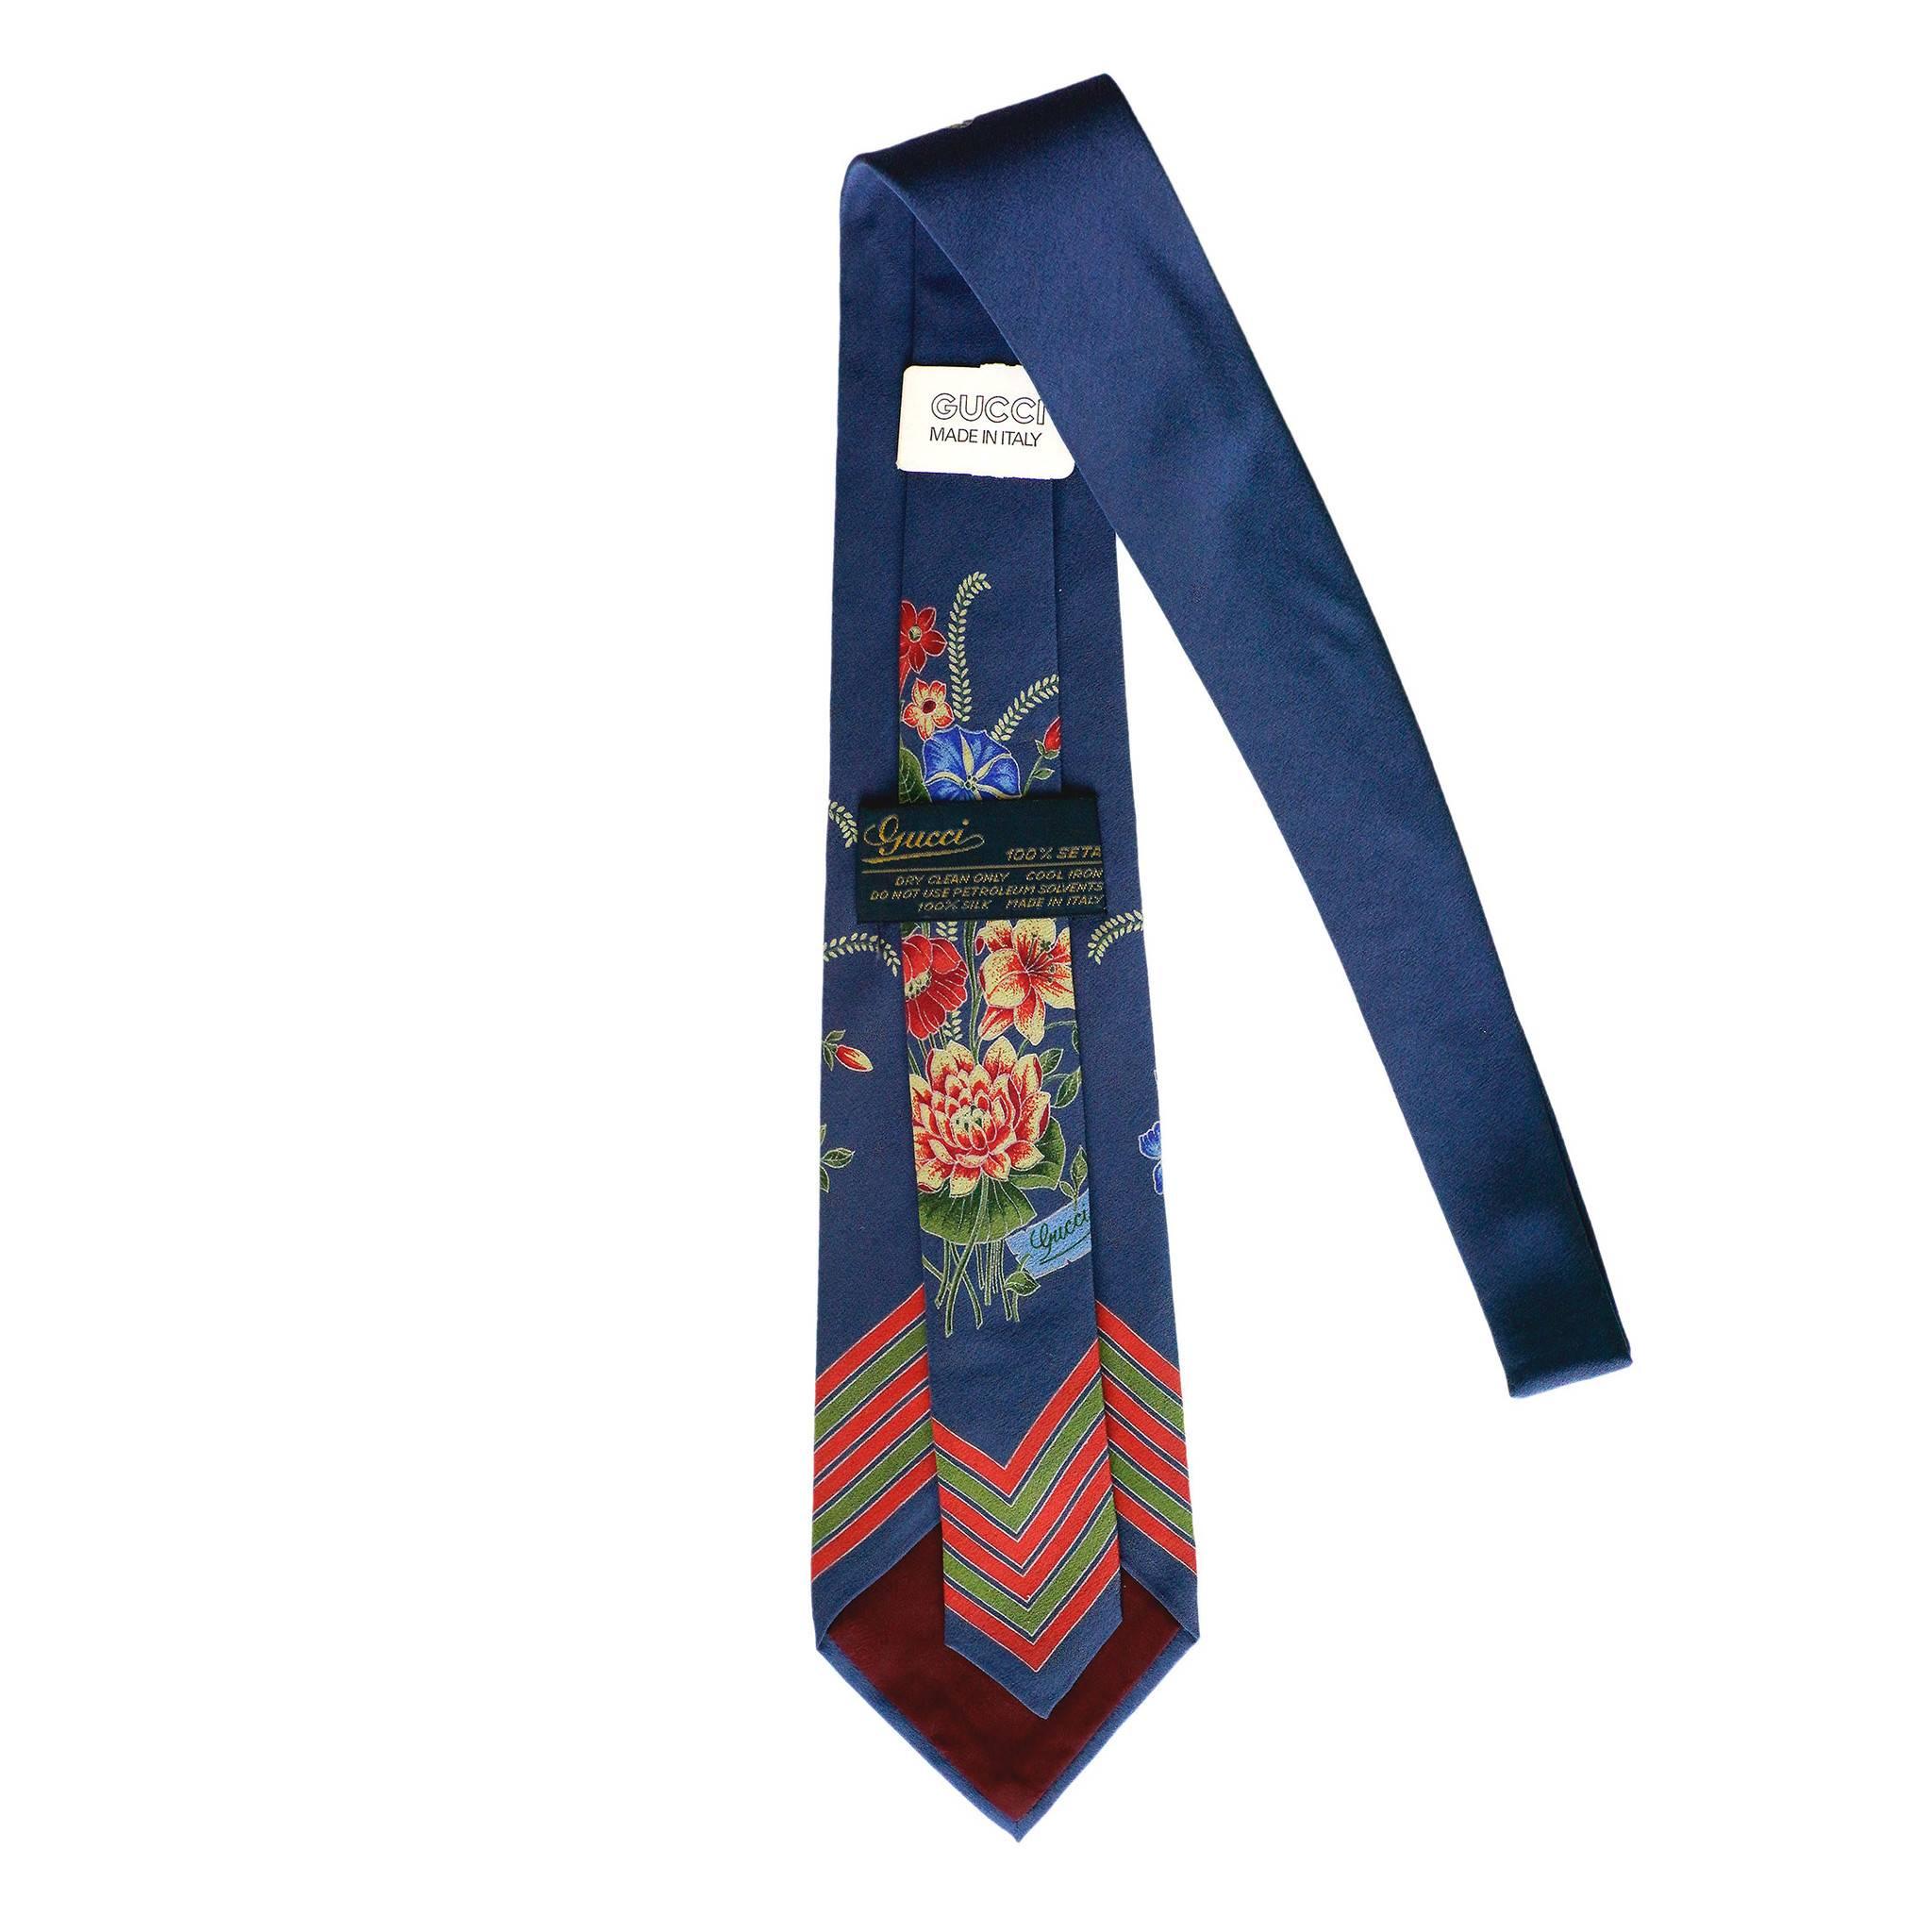 Vintage Gucci floral silk tie with horizontal stripes.

-Measurements-
length: 55